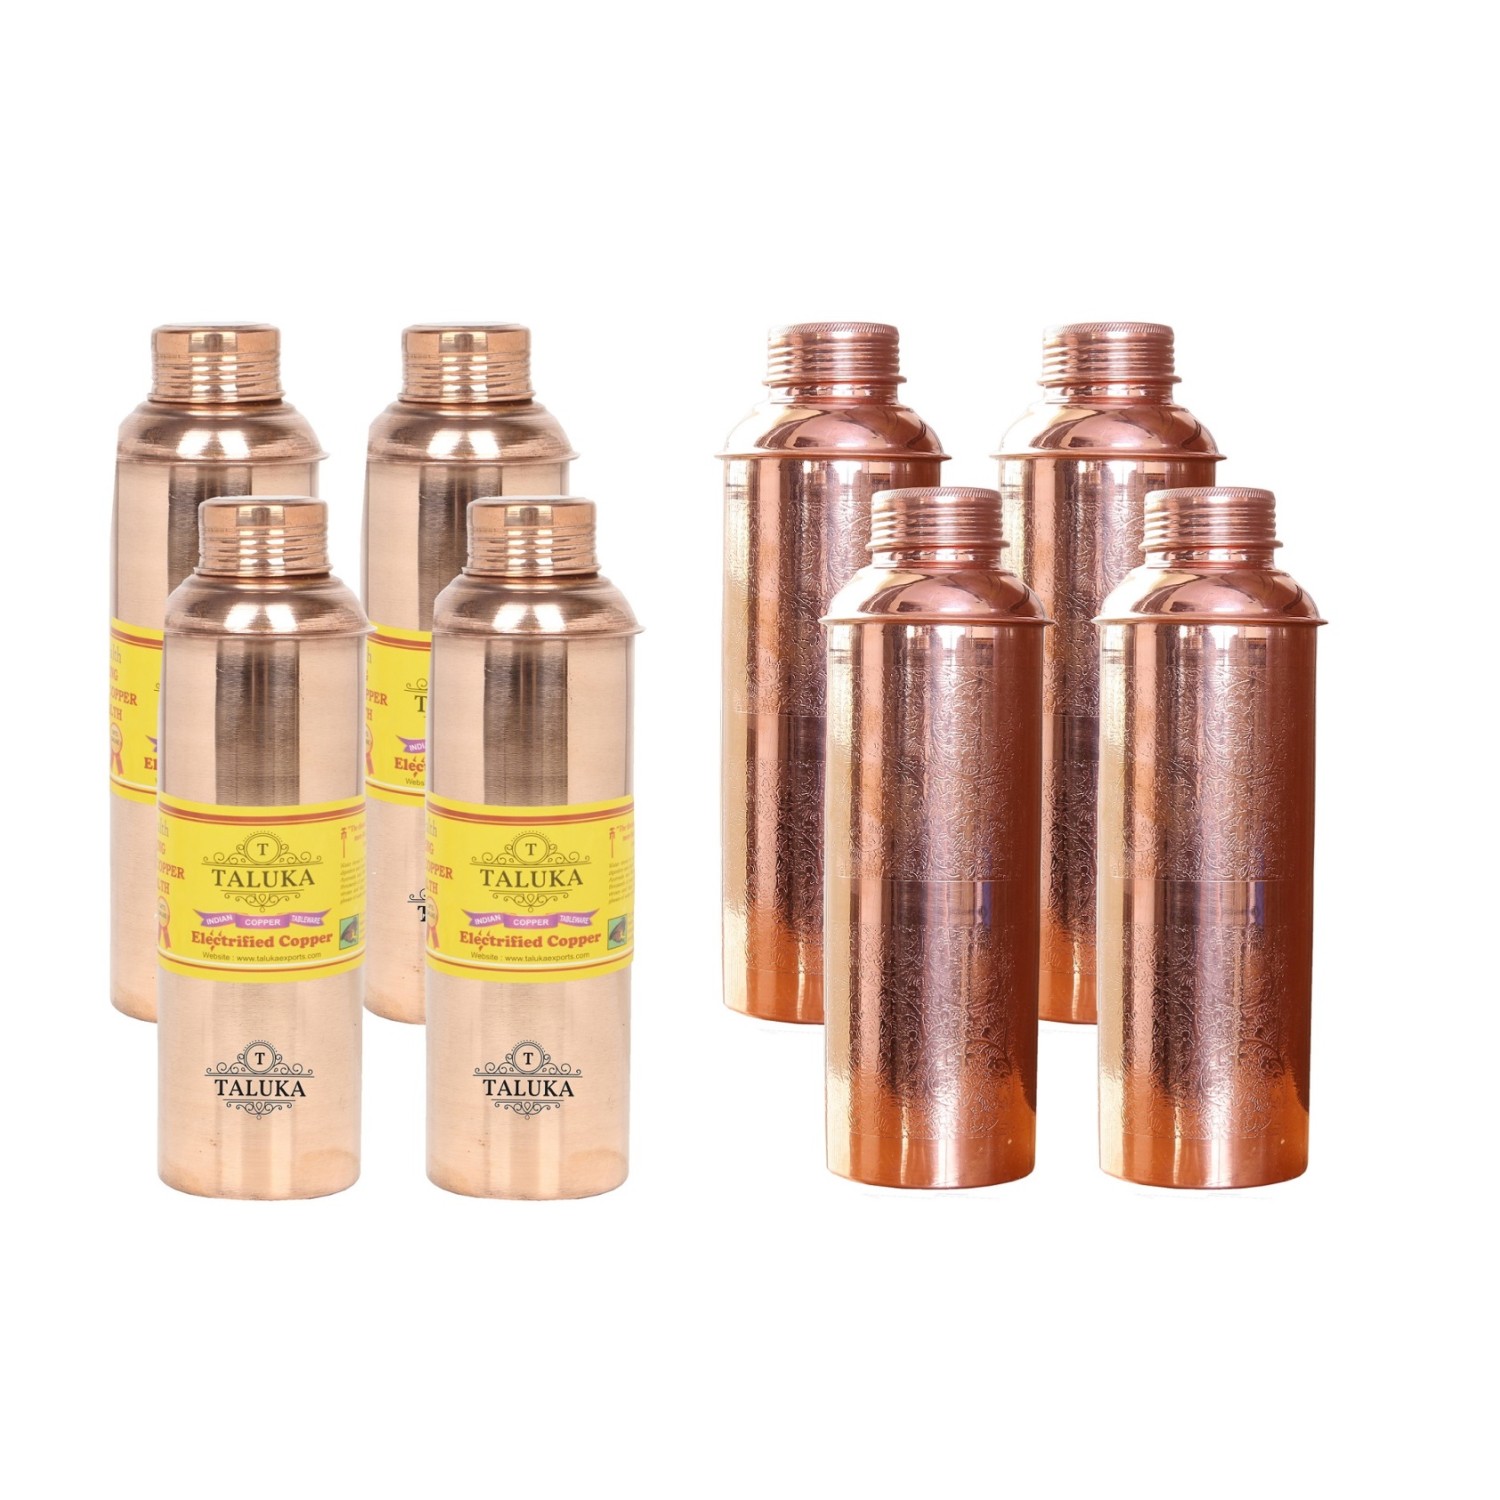 Handmade Pure Copper Bisleri And Etching Design Water Bottle 800 ML Set Of 8 Drink Ware Storage Bottle For Good Health